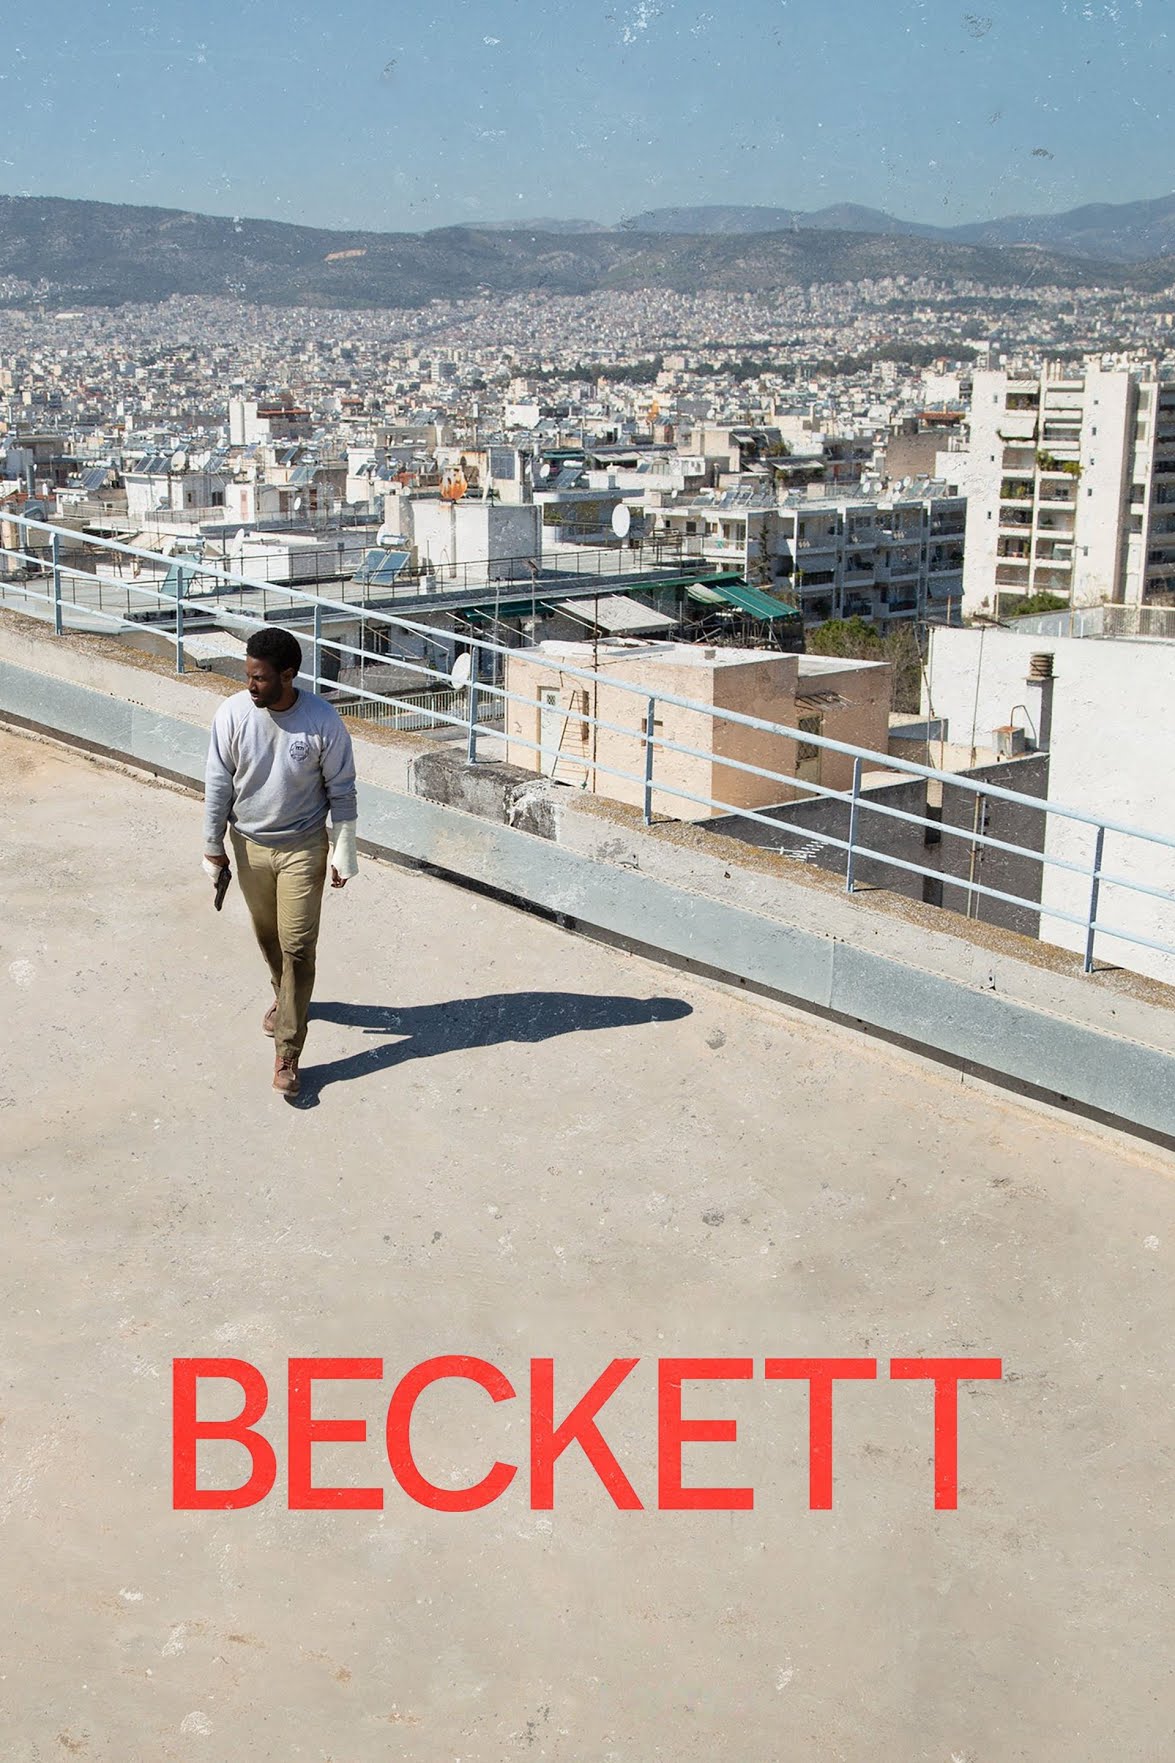 [MINI Super-HQ] Beckett (2021) ปลายทางมรณะ [1080p] [NETFLIX] [พากย์ไทย 5.1 + เสียงอังกฤษ 5.1] [บรรยายไทย + อังกฤษ] [เสียงไทย + ซับไทย] [DOSYAUPLOAD]